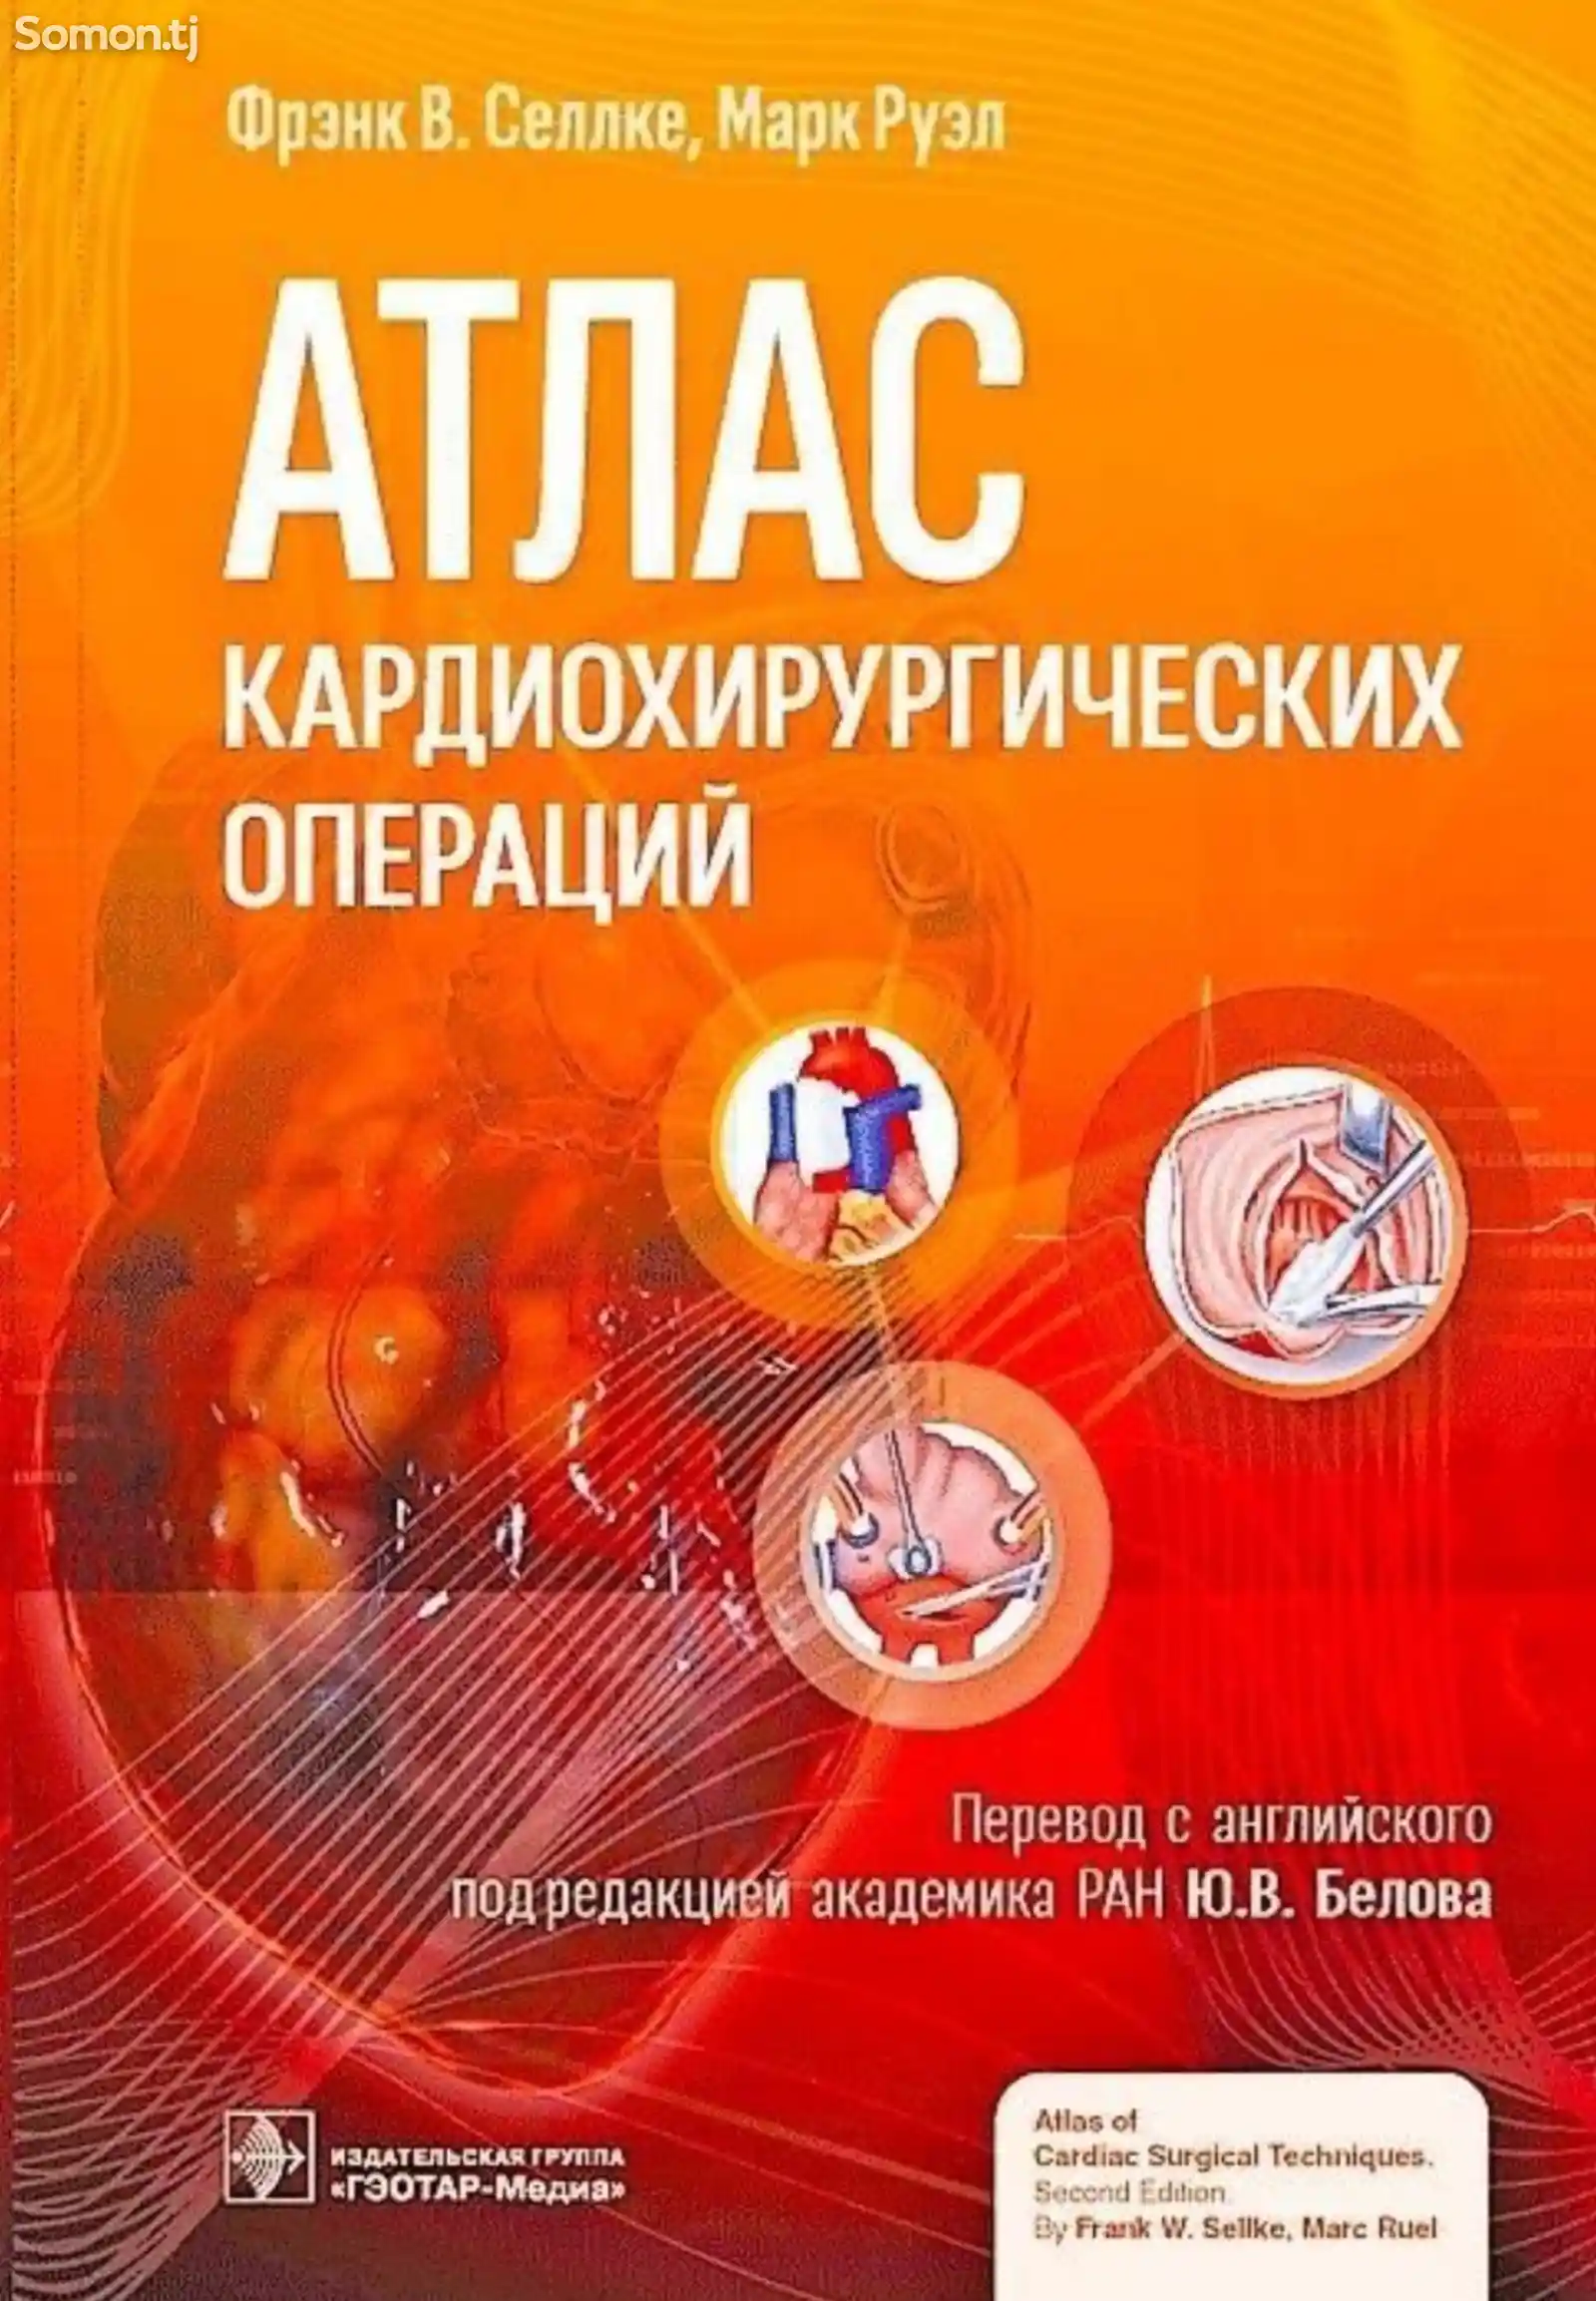 Книга Атлас кардиохирургических операций на заказ-1